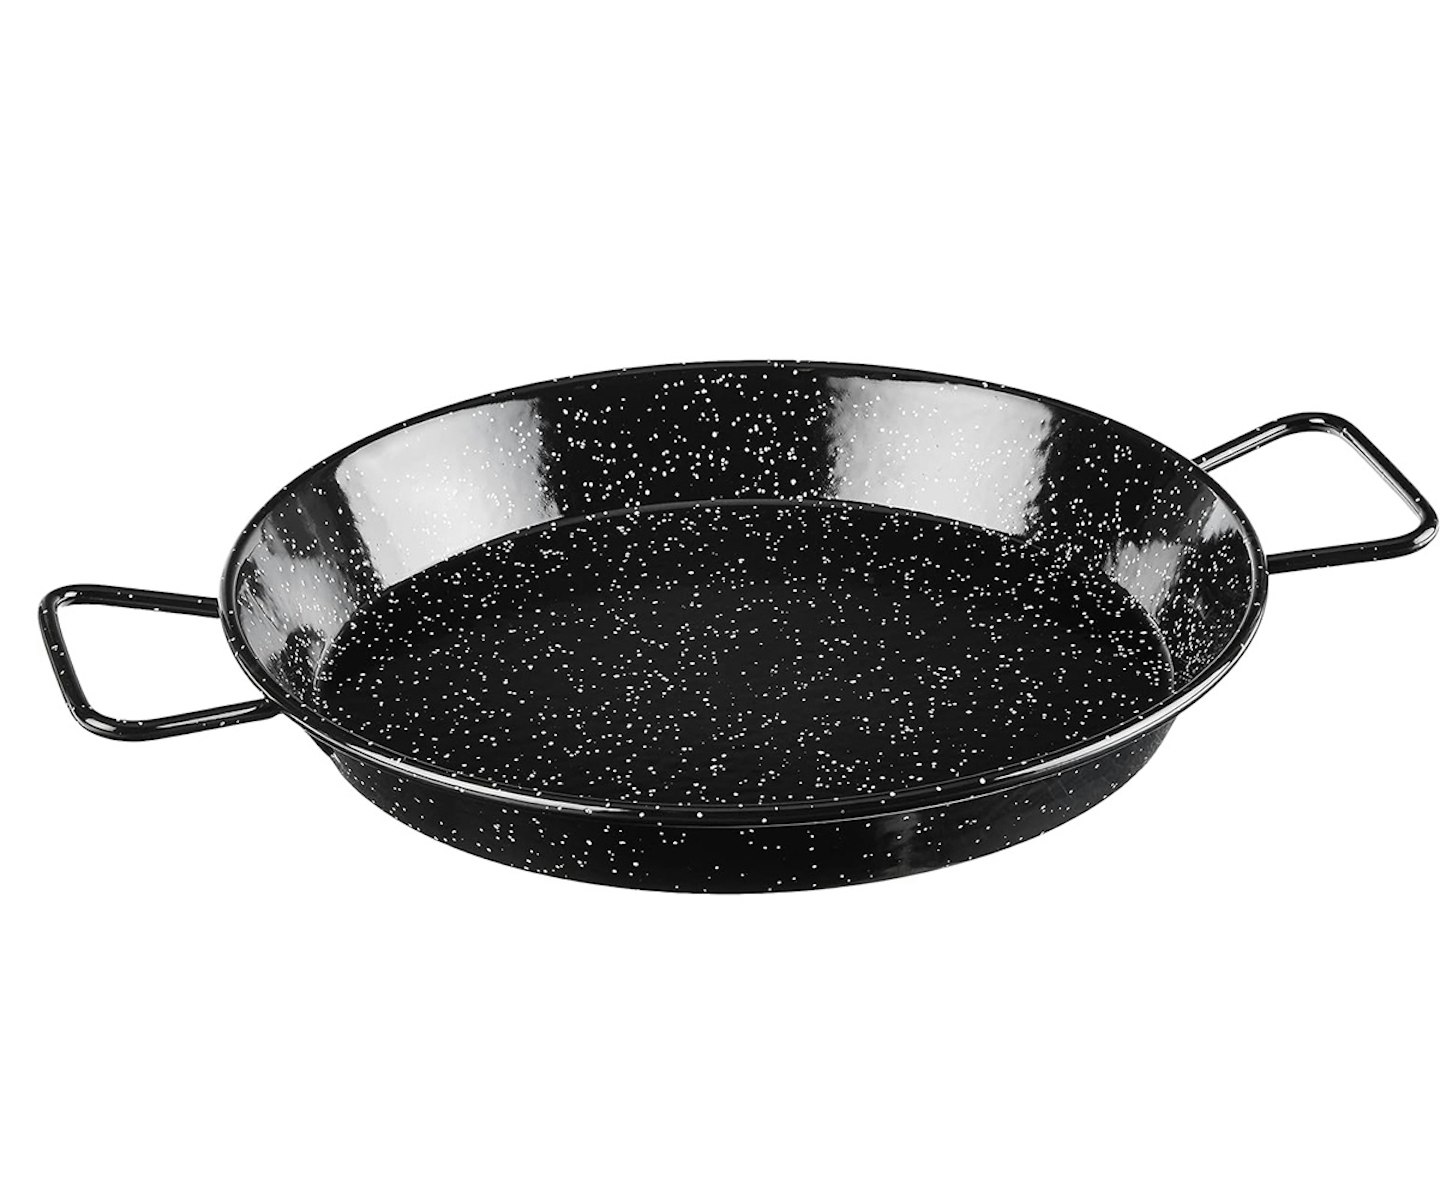 18-Inch Enameled Steel Spanish Paella Pan